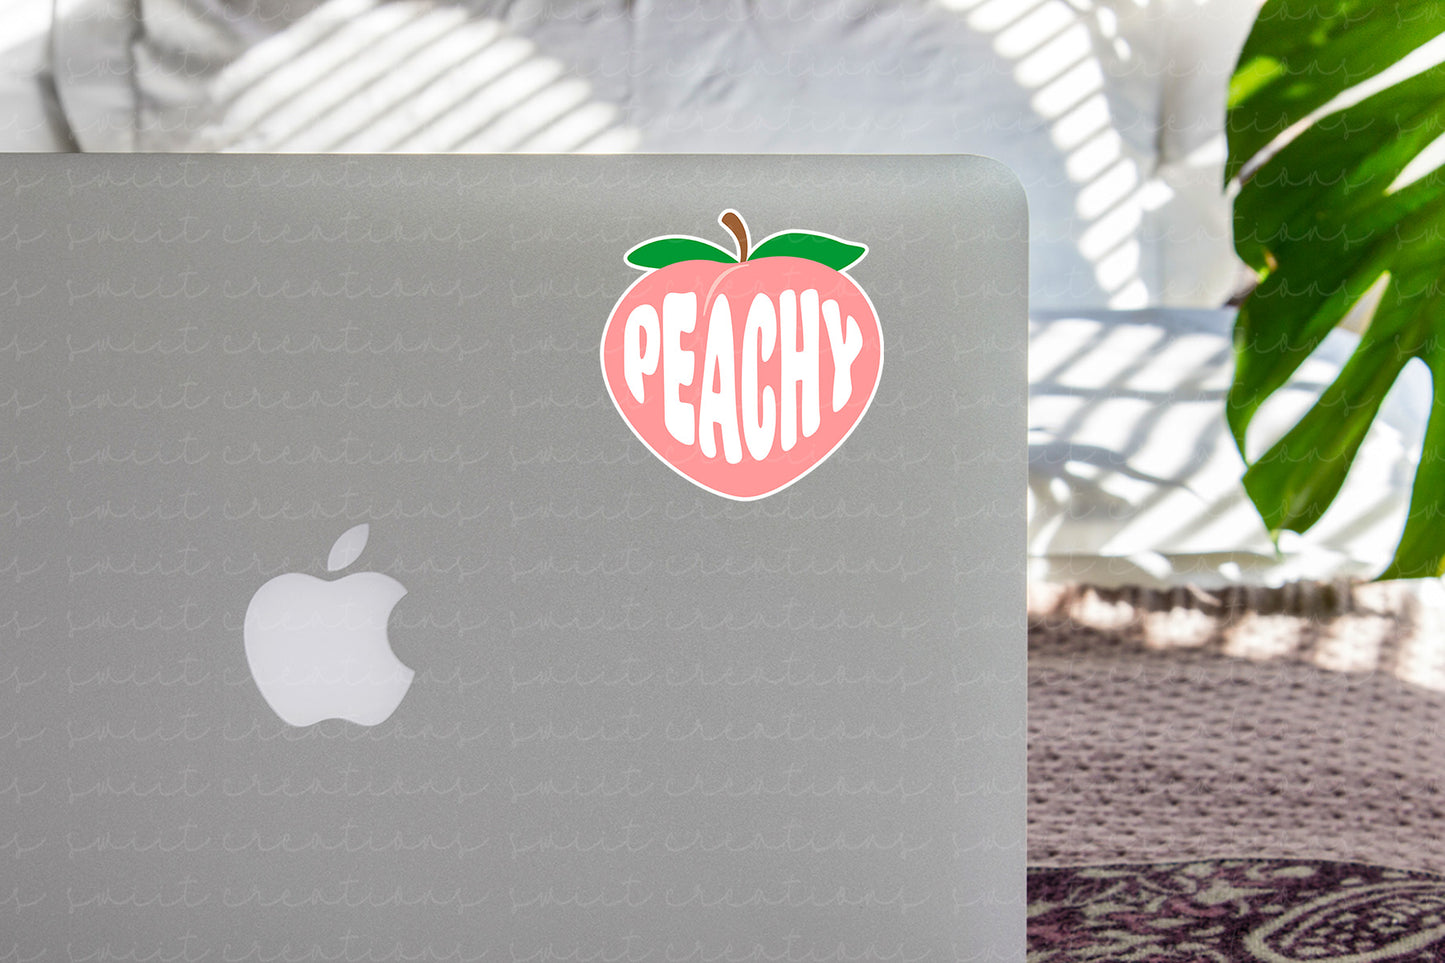 Peachy Sticker (SS809)